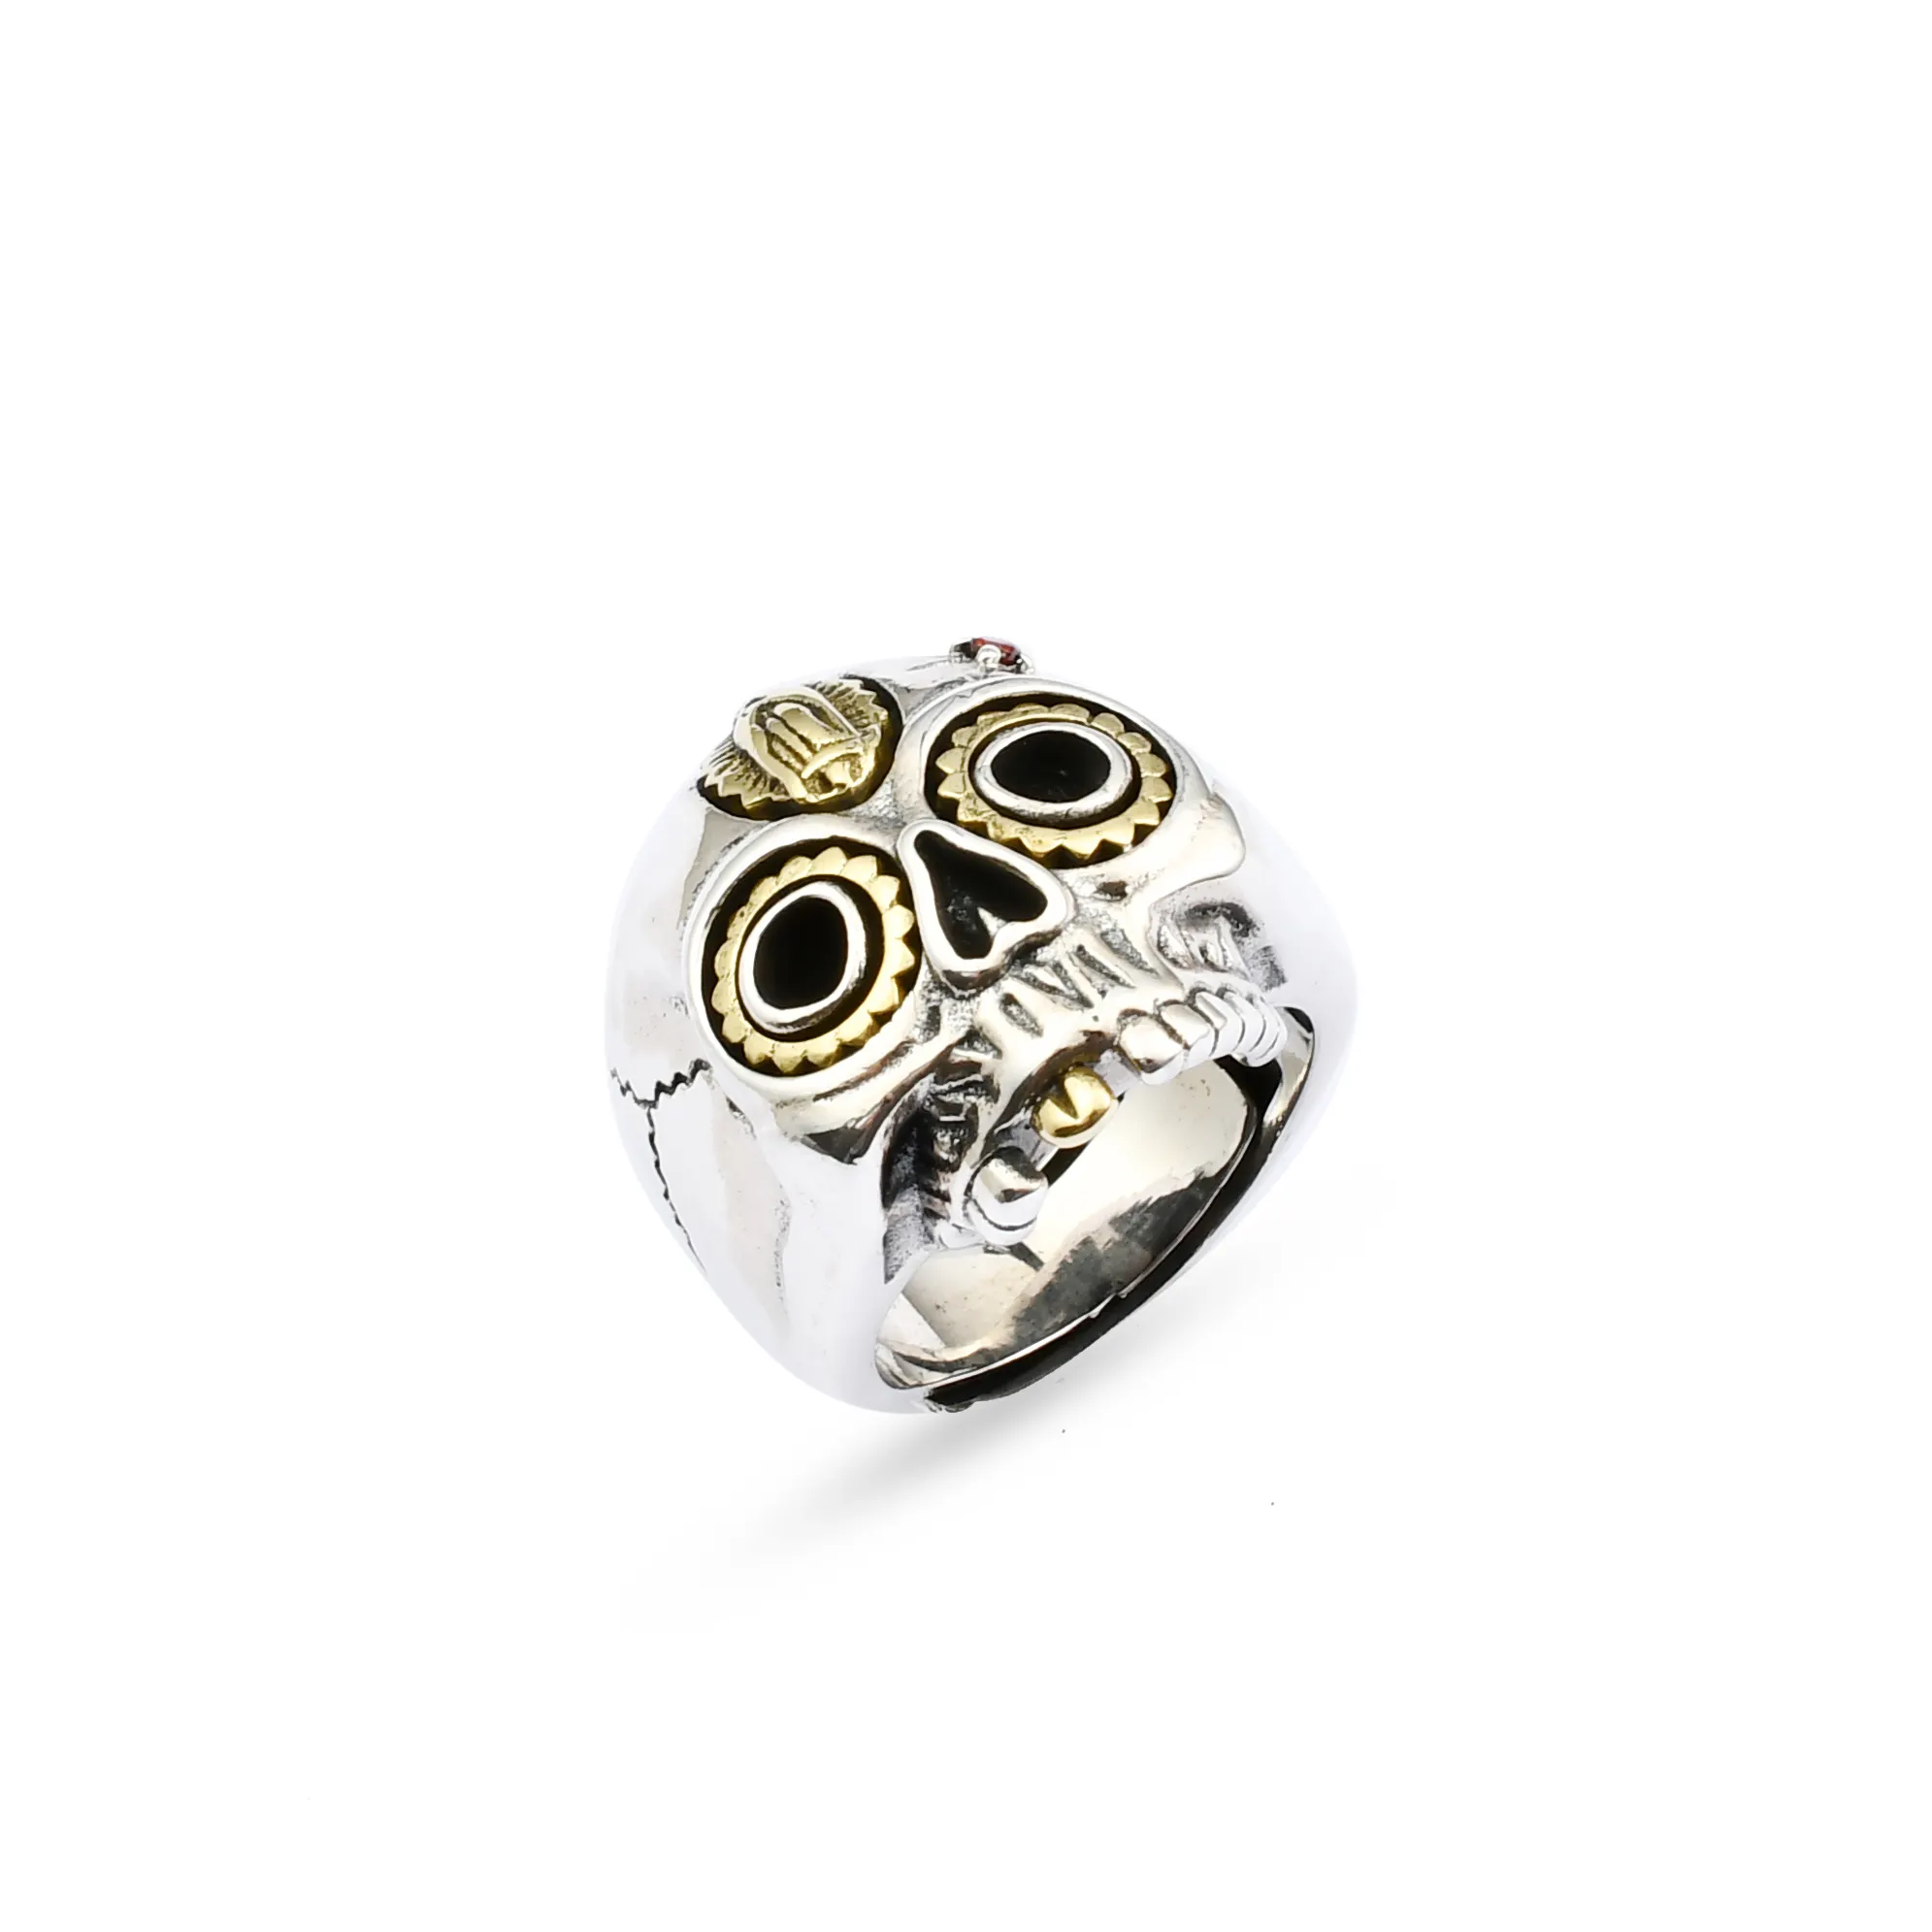 Low price 925 silver skull ring jewelry skull ring men punk Rock